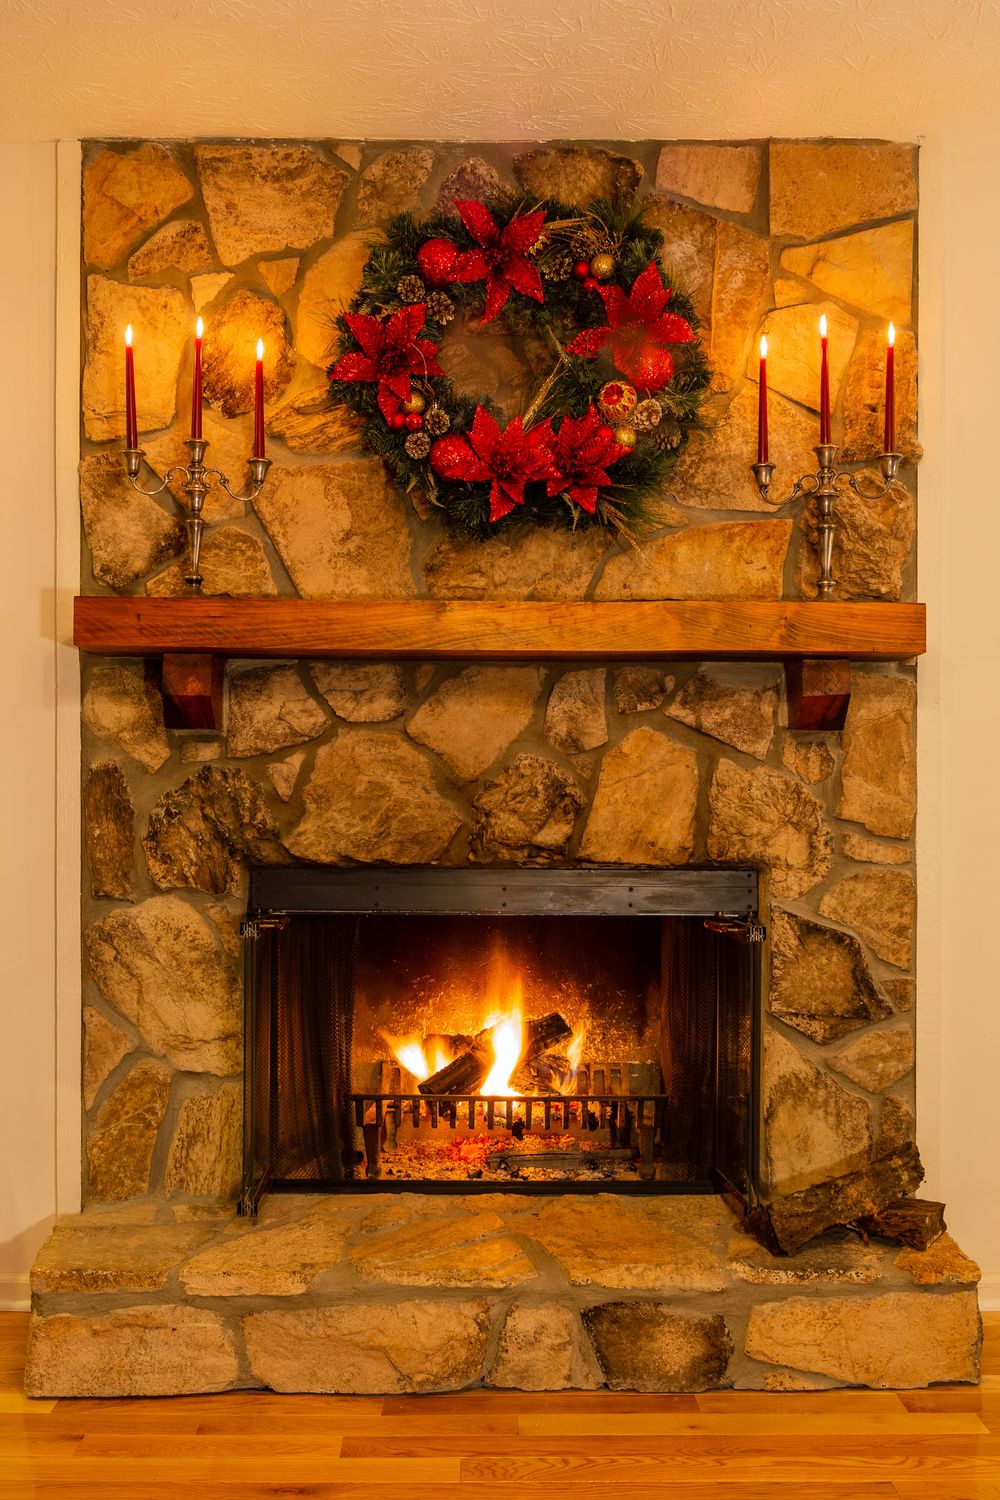 Fireplace mantel ideas poinsettia wreath